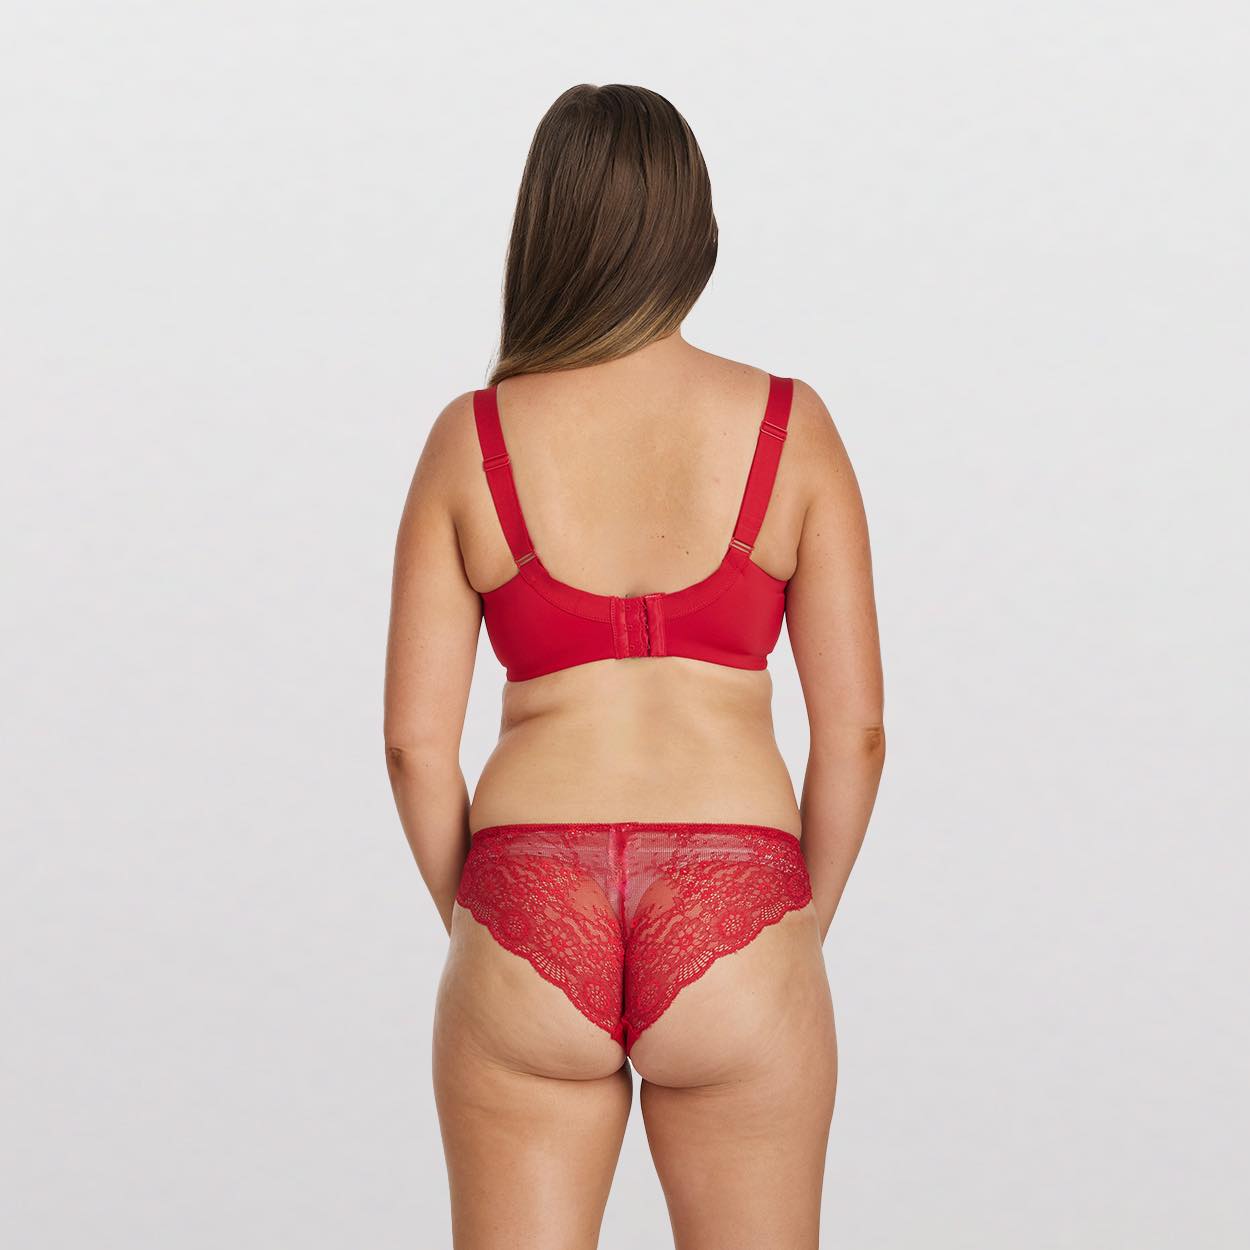 Peony Lace Premium Support Bra & Bikini Brief Set - Savvy Red